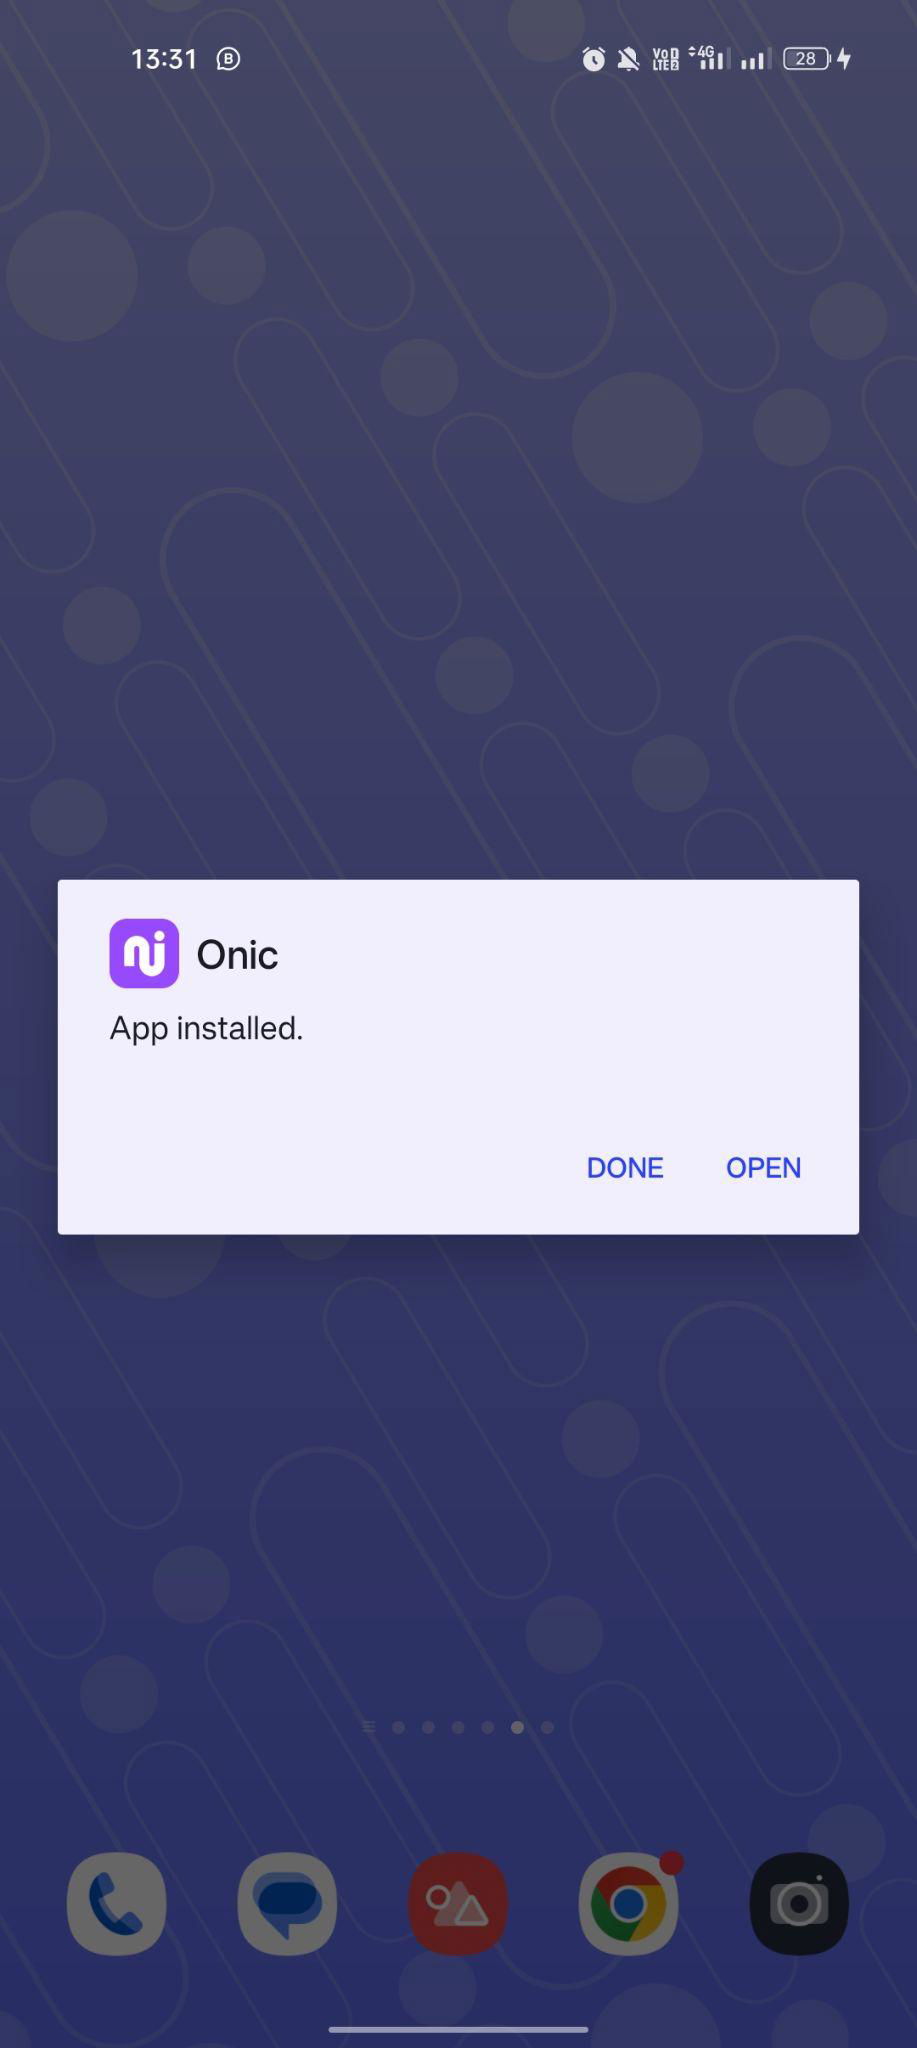 Onic apk installed